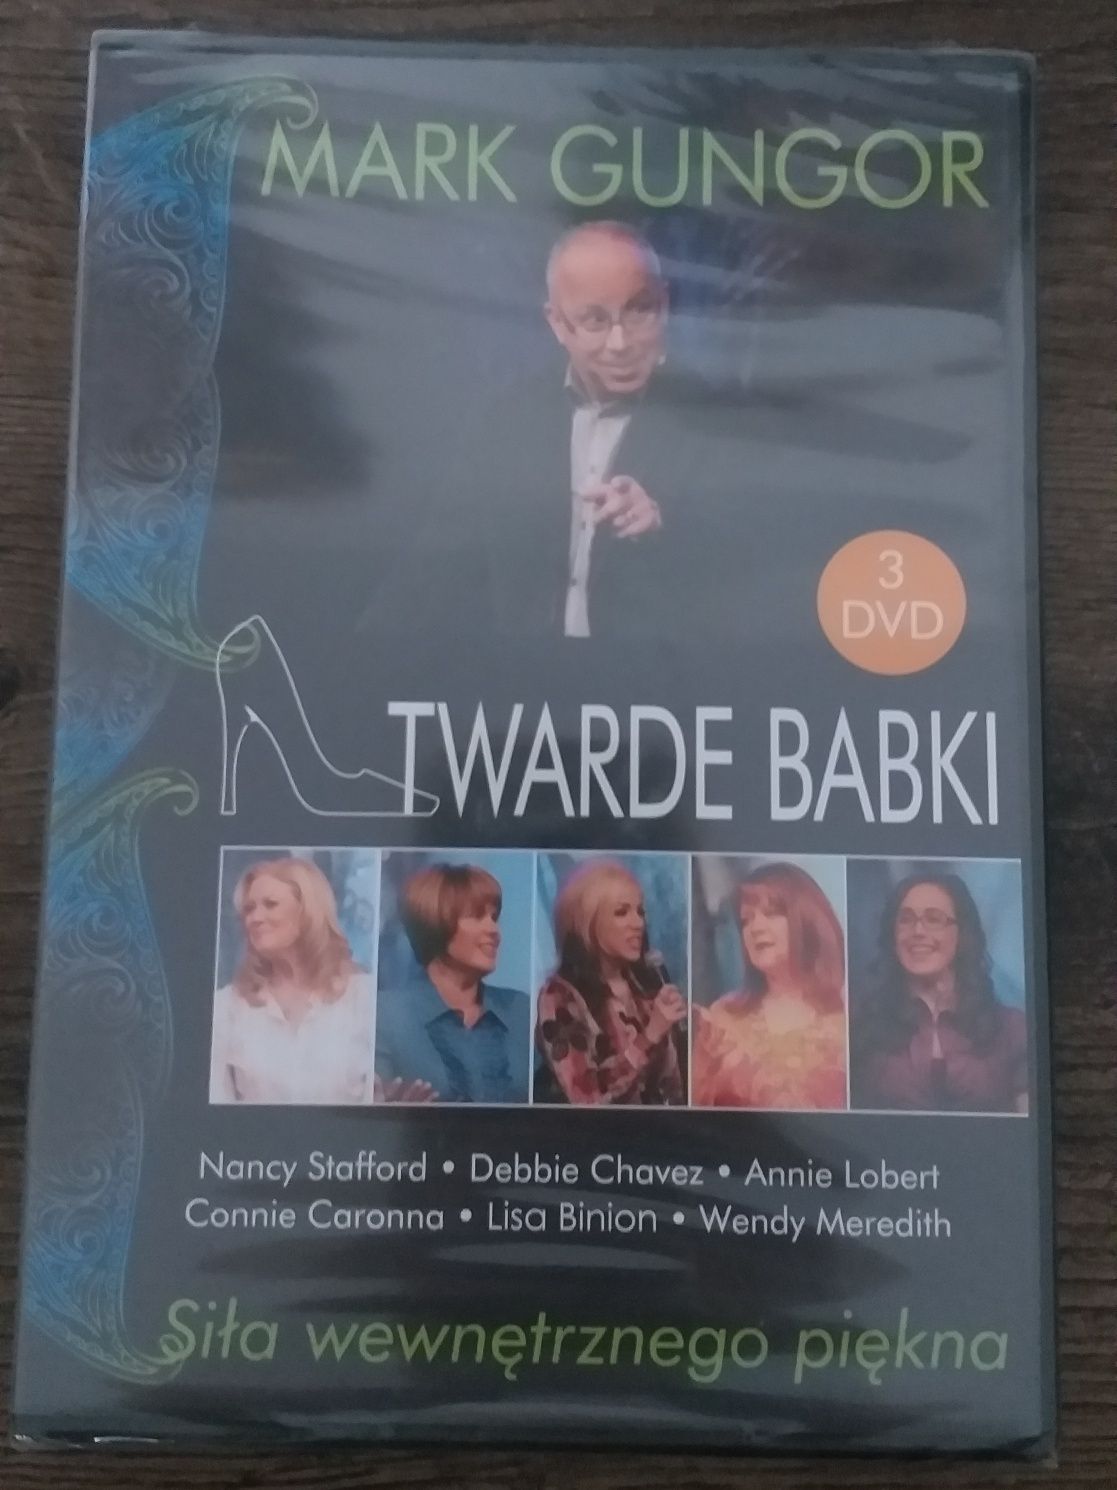 Mark Gungor - Twarde babki DVD NOWA